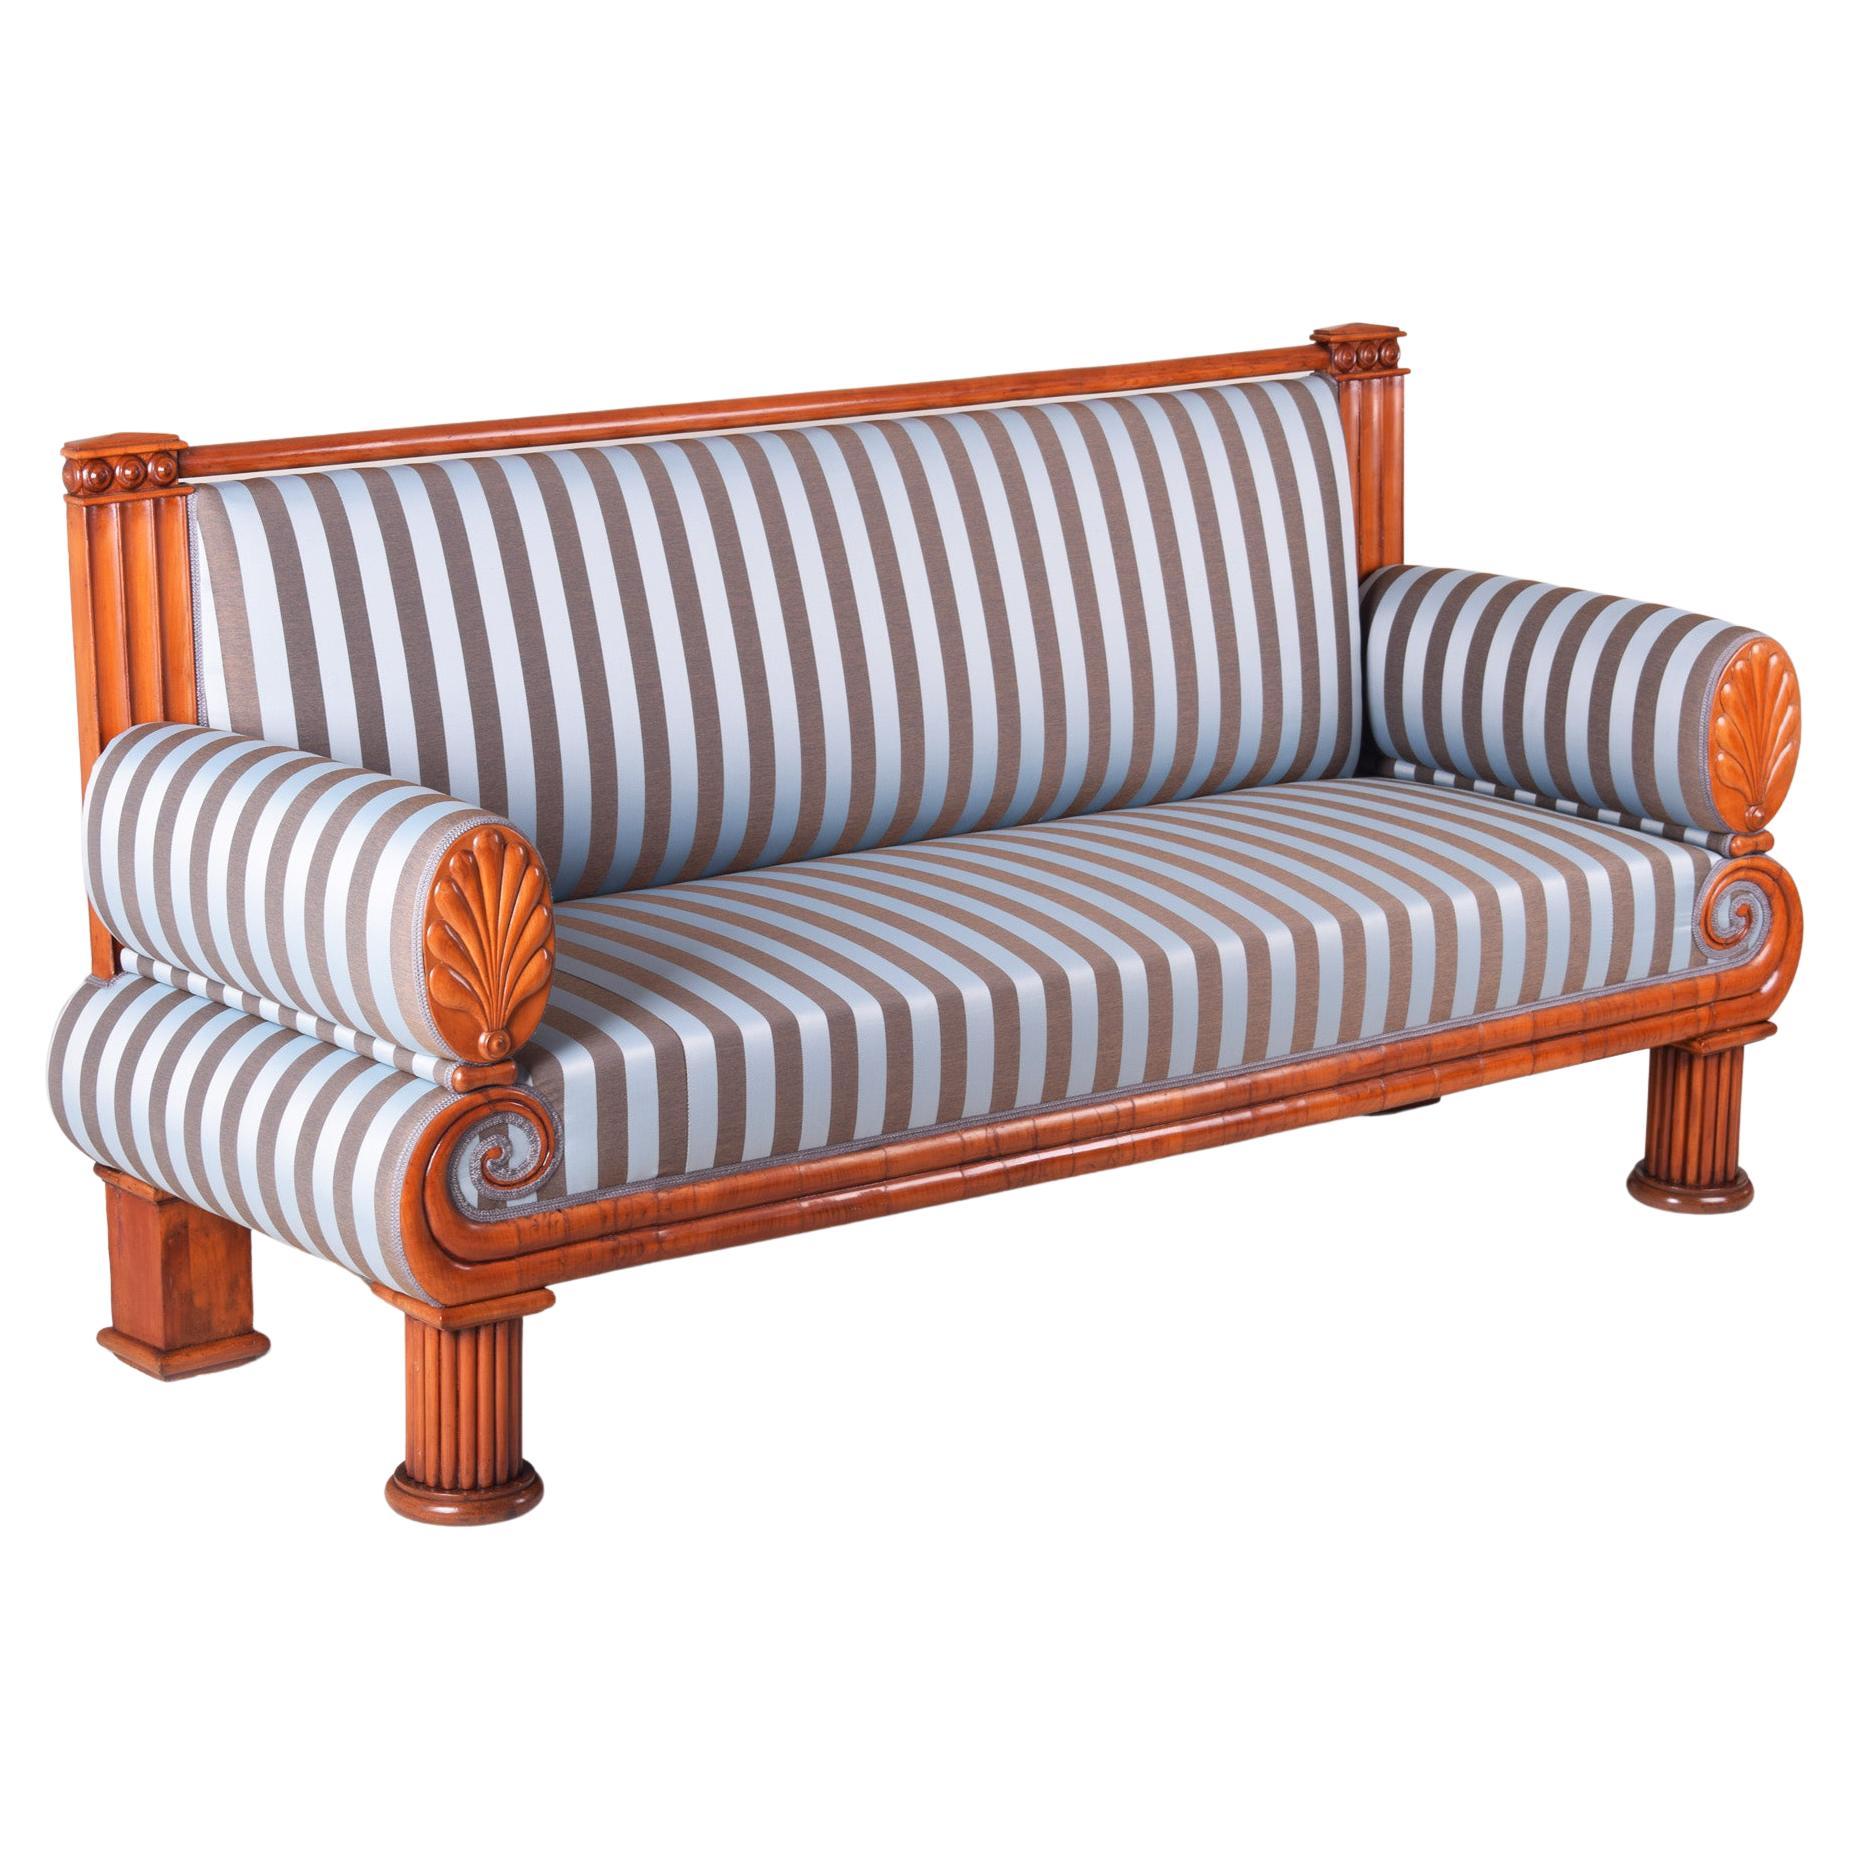 19th Century Biedermeier Sofa, Cherrywood, 1820s, Made in Czechia, Restored  For Sale at 1stDibs